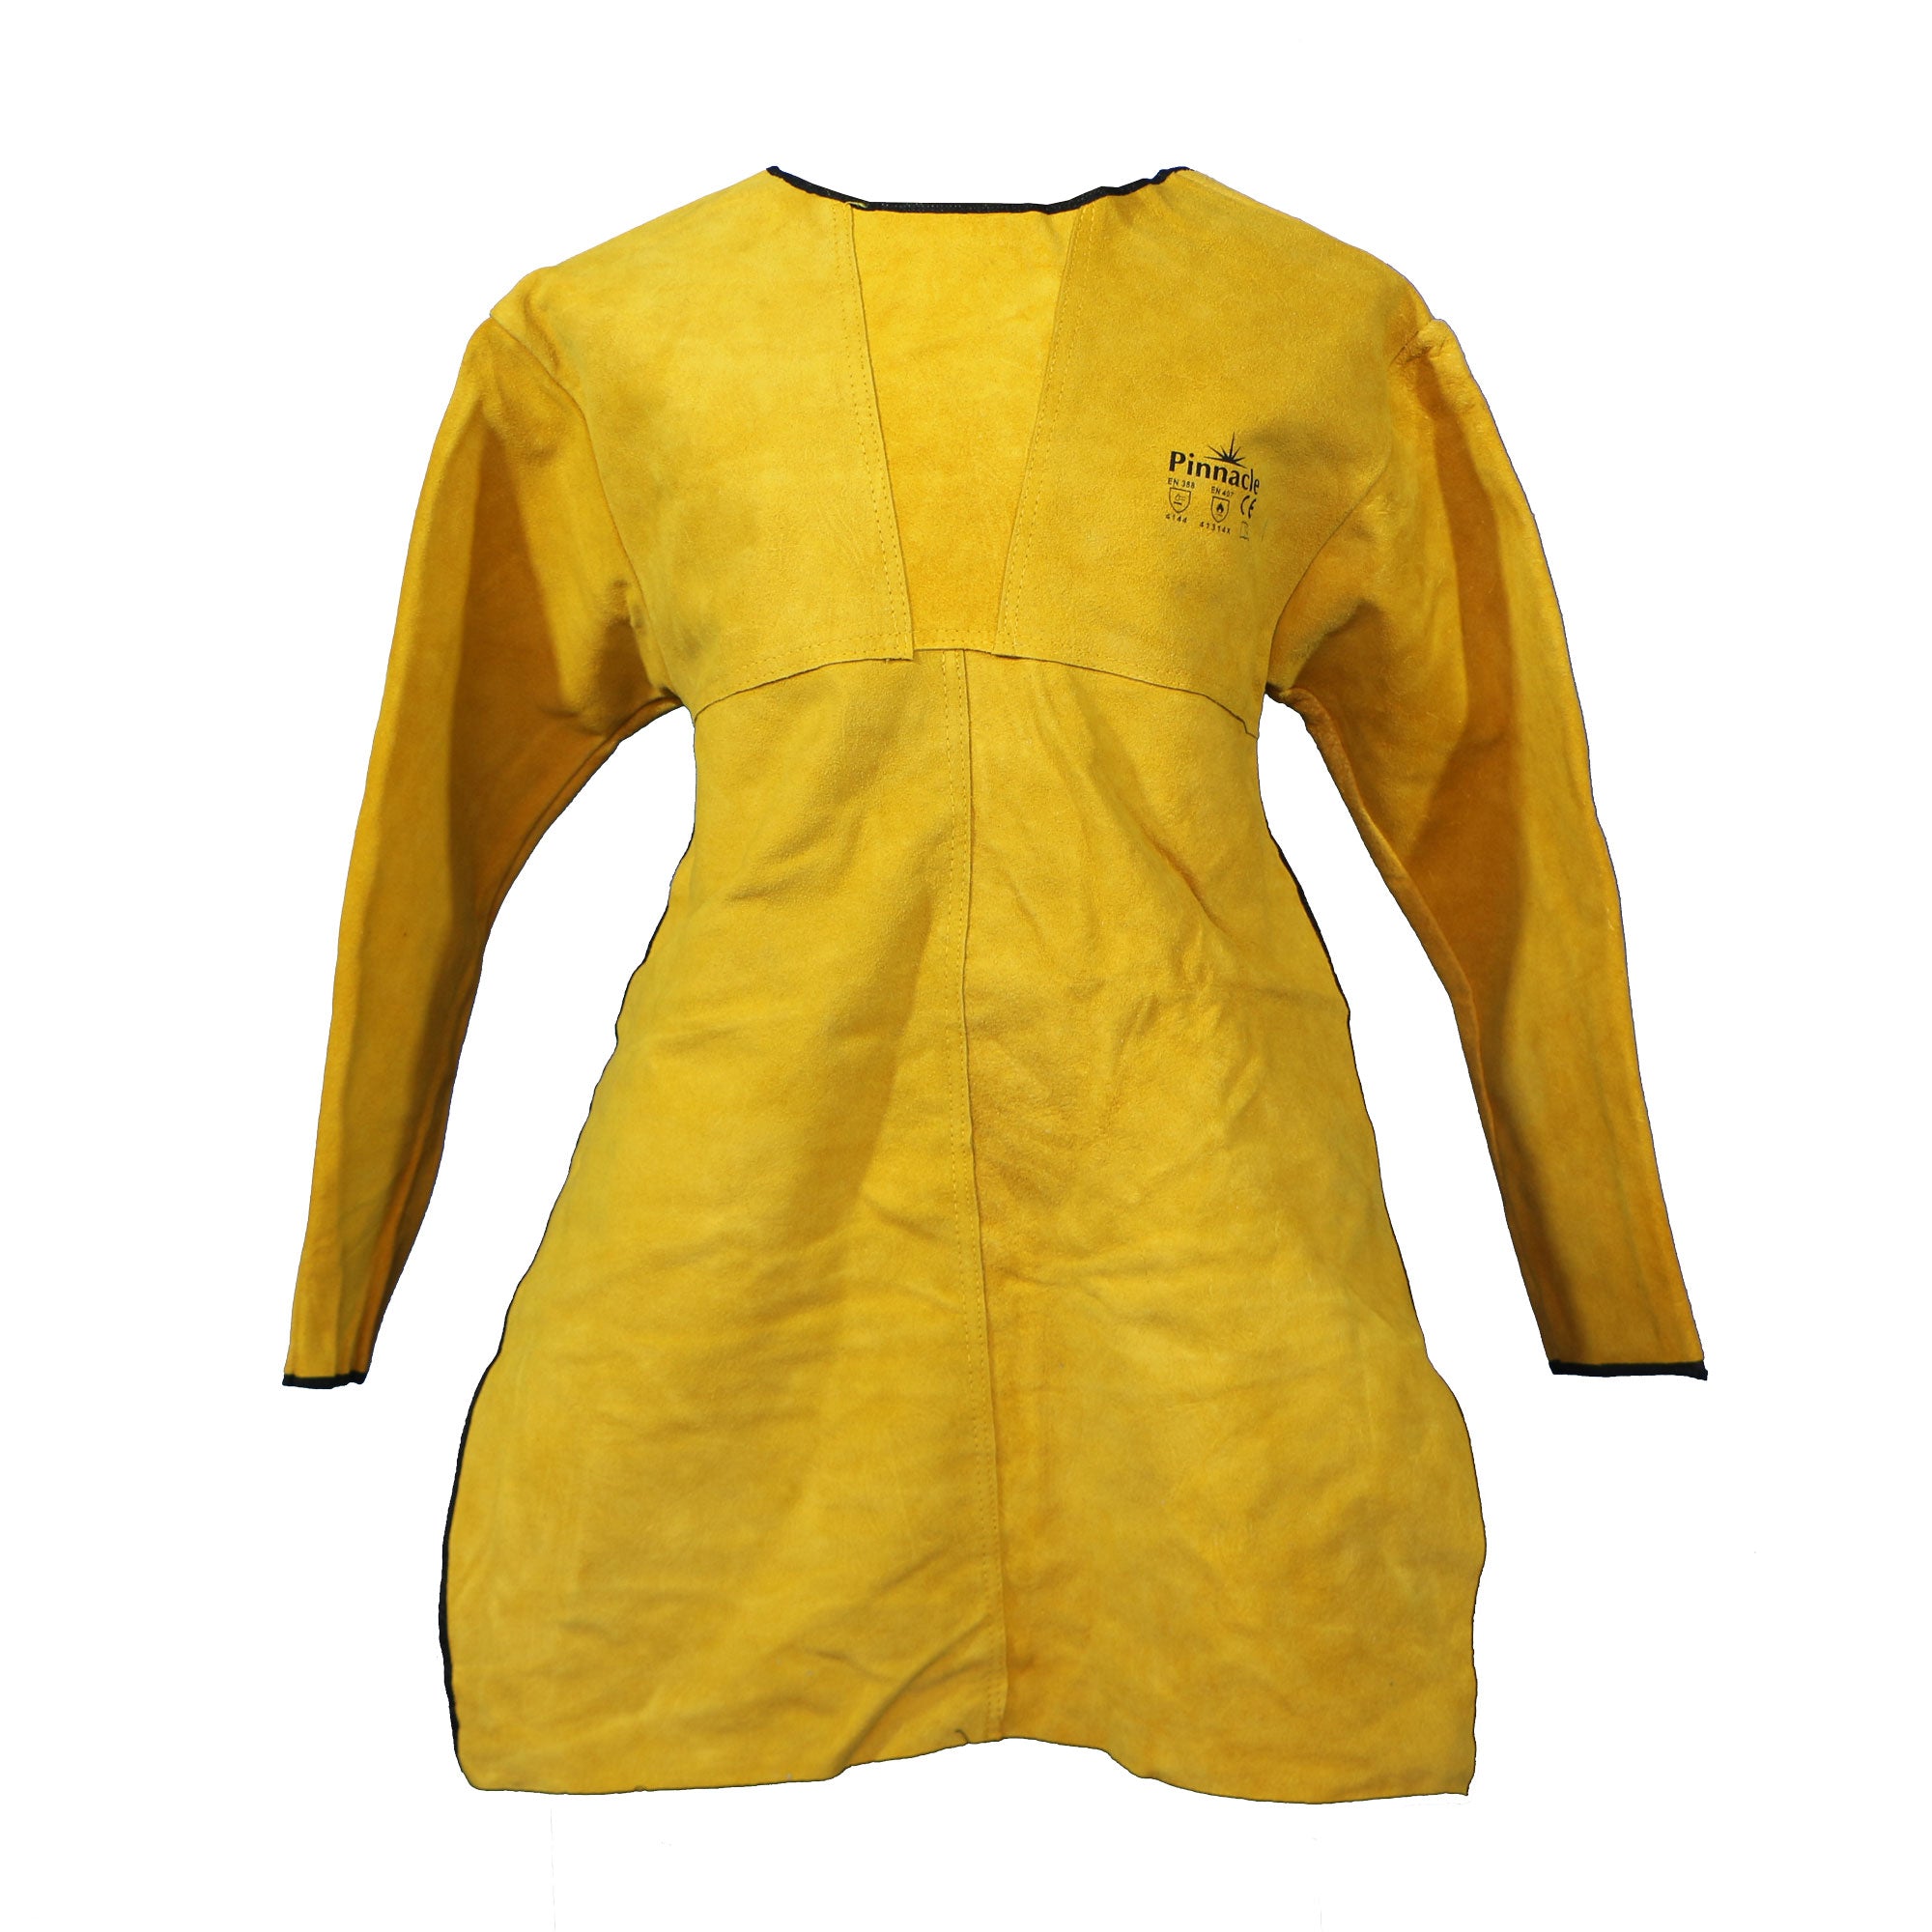 Pinnacle Yellow Suede Leather Welding Yoke & Apron - Welding Jacket, Yoke, and Apron in One